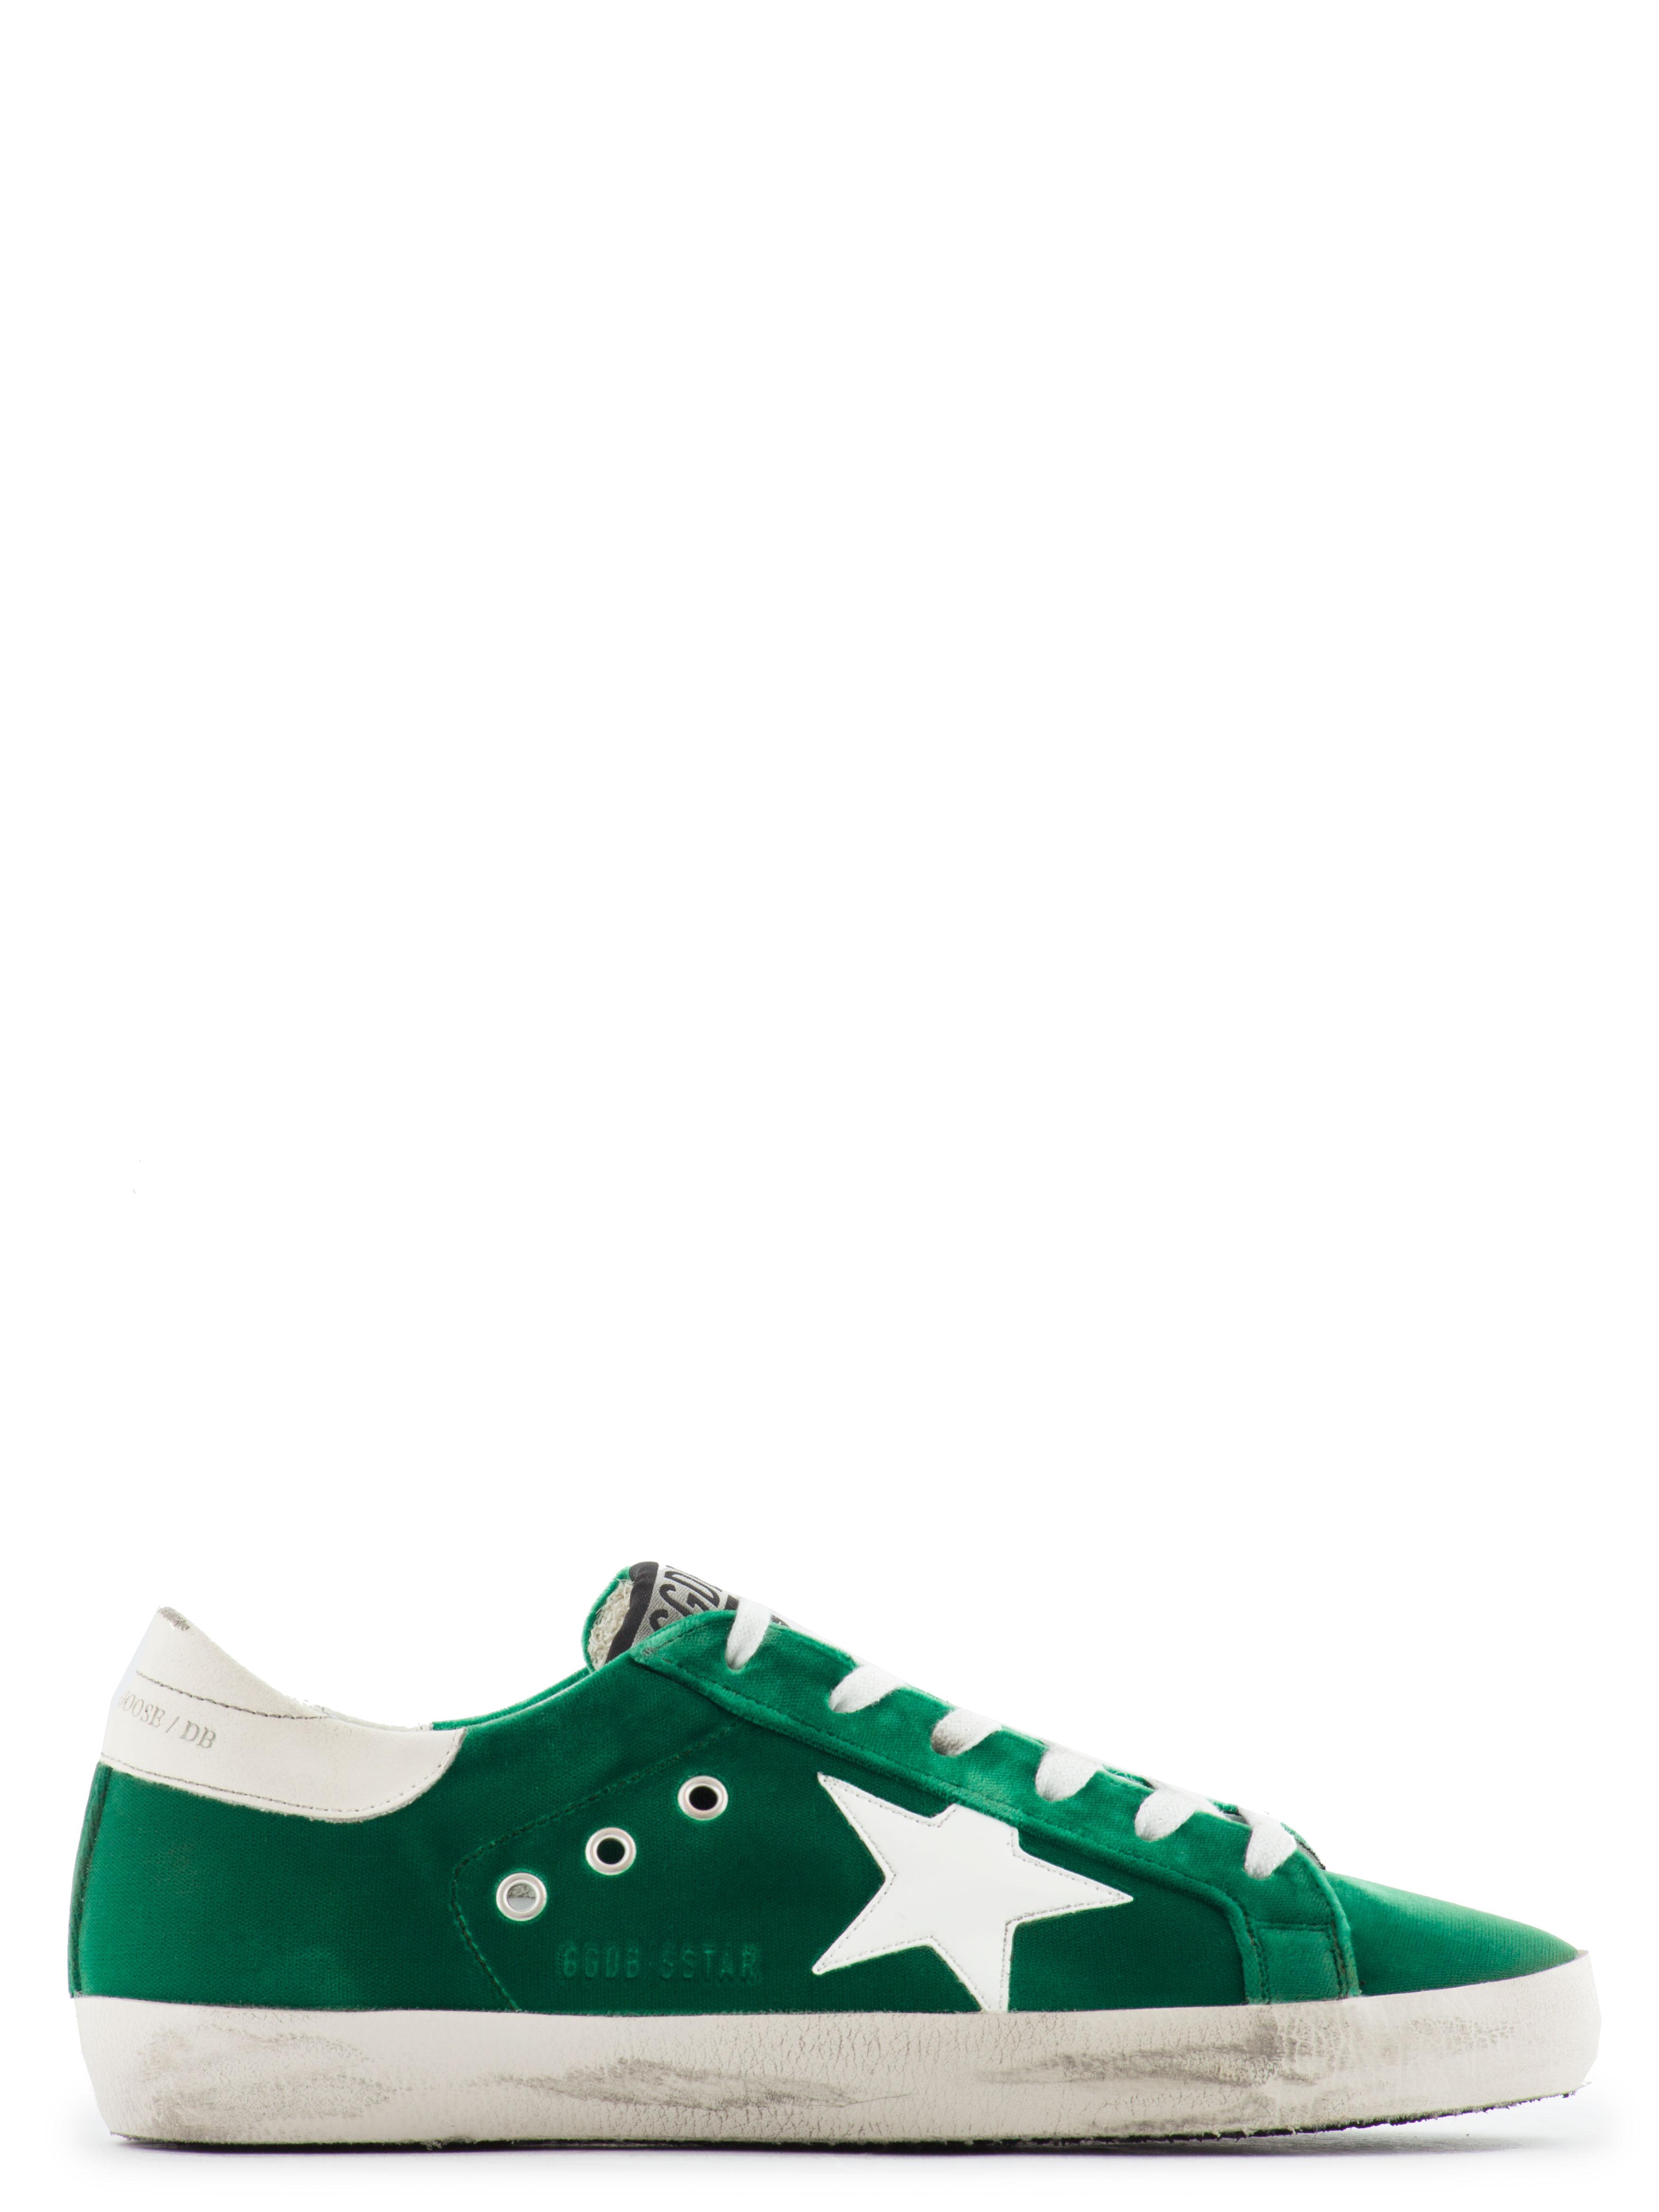 Golden Goose 'superstar' Velvet Sneakers in Green | Lyst